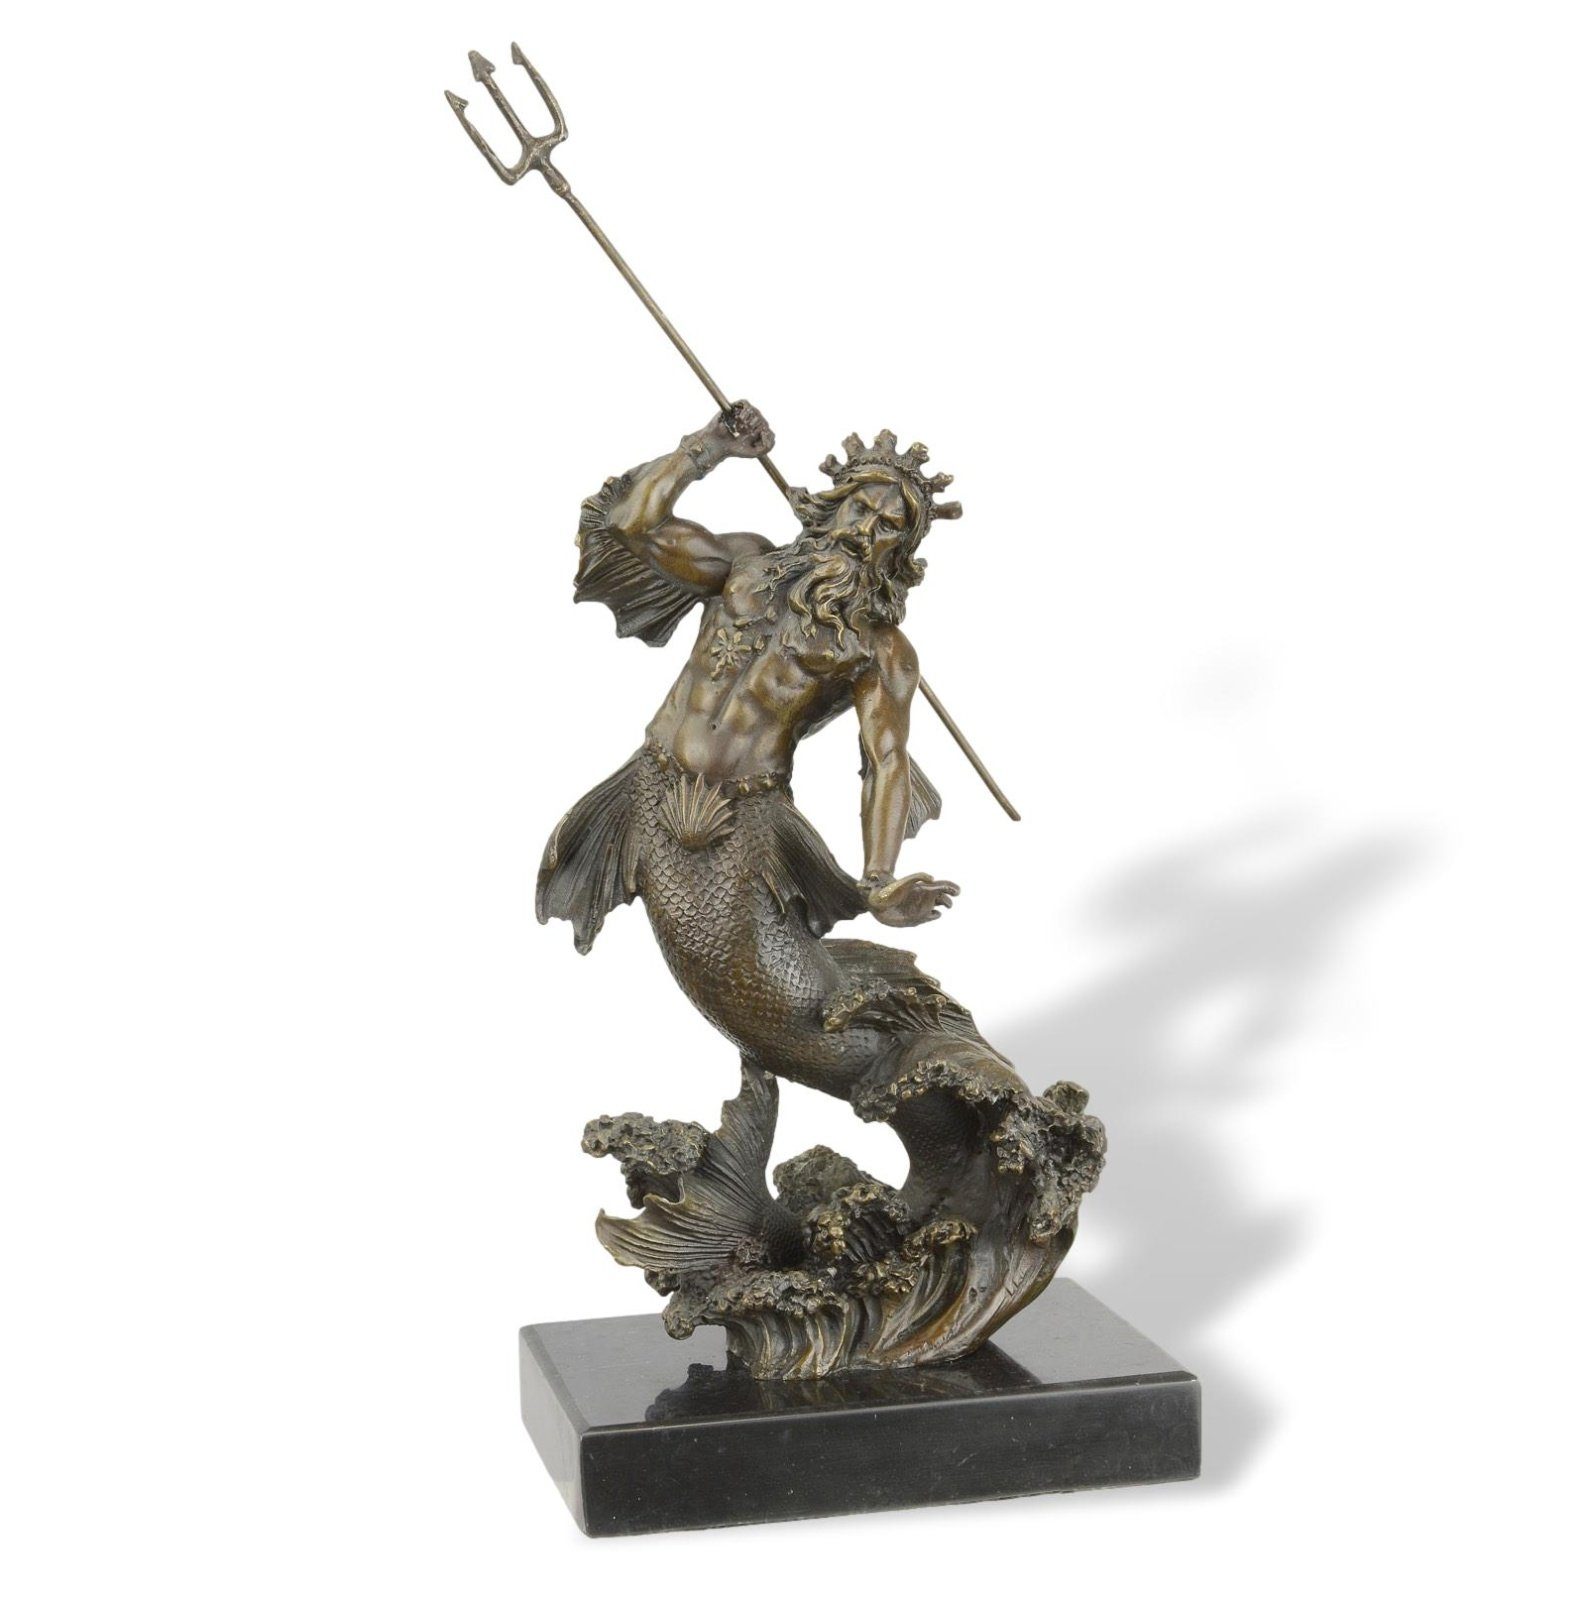 Aubaho Skulptur Bronzefigur Poseidon Gott des Meeres Mythologie Bronze Skulptur Antik-